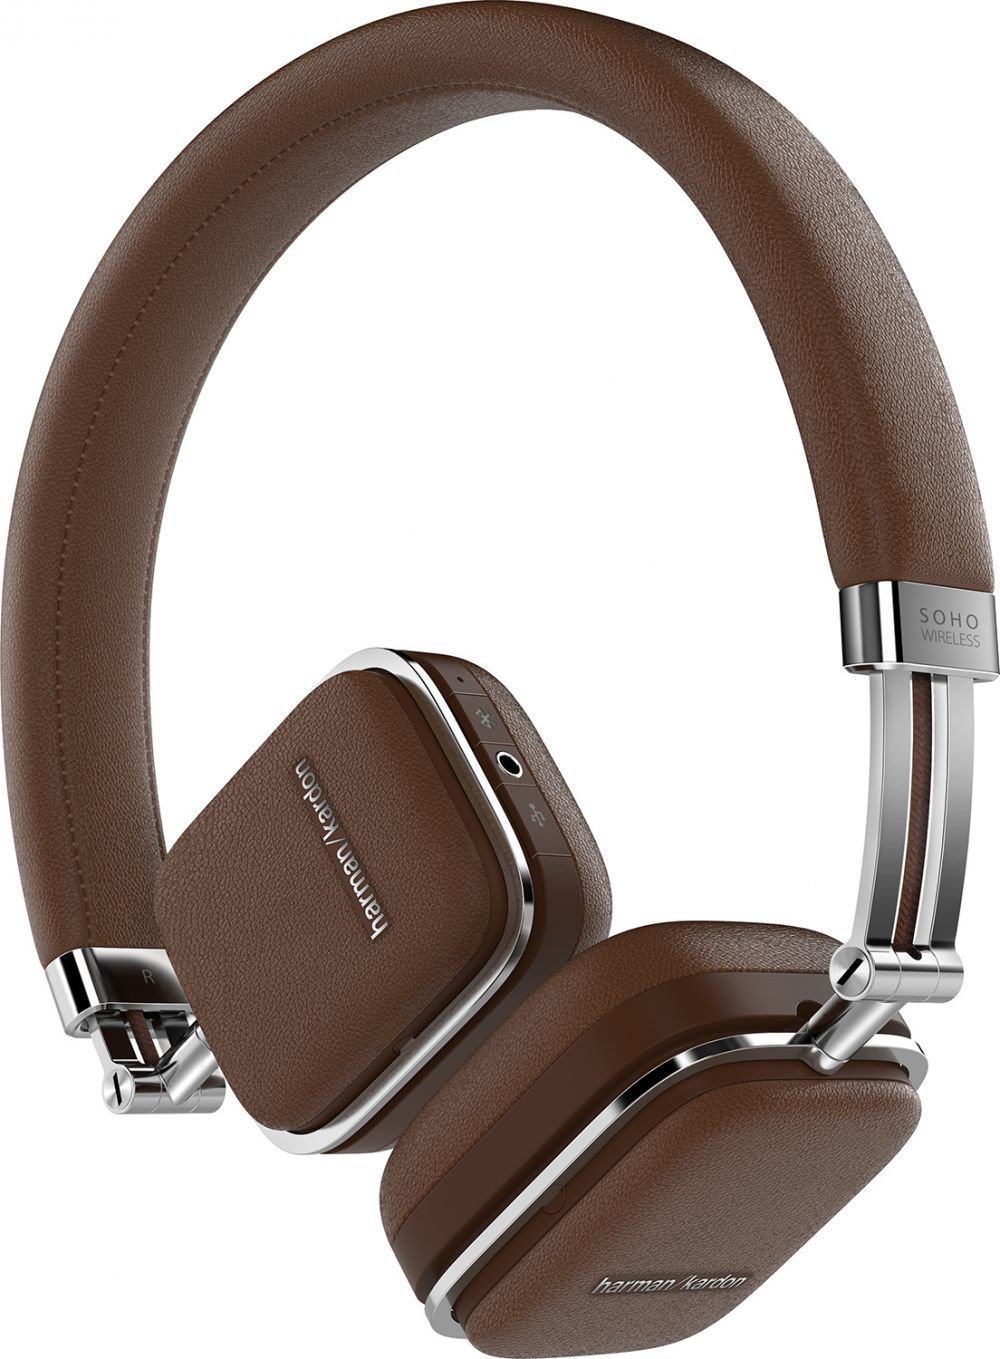 Bezdrátová sluchátka na uši Harman Kardon Soho Wireless Brown